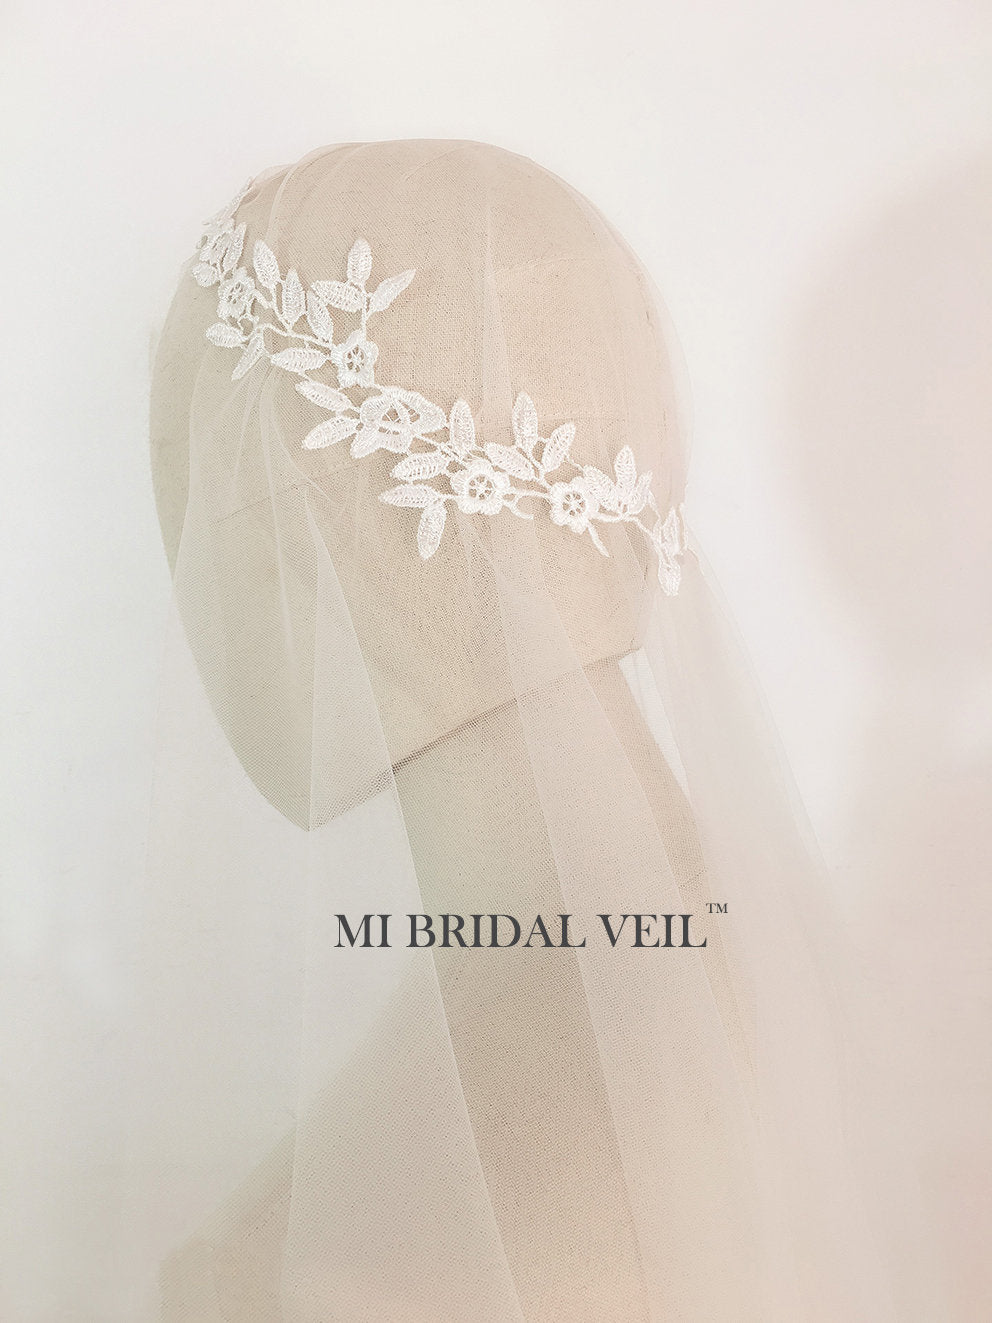 Juliet Cap Veil,1920s Inspired Bridal Veil, Rose Lace Wedding Veil, Mi Bridal